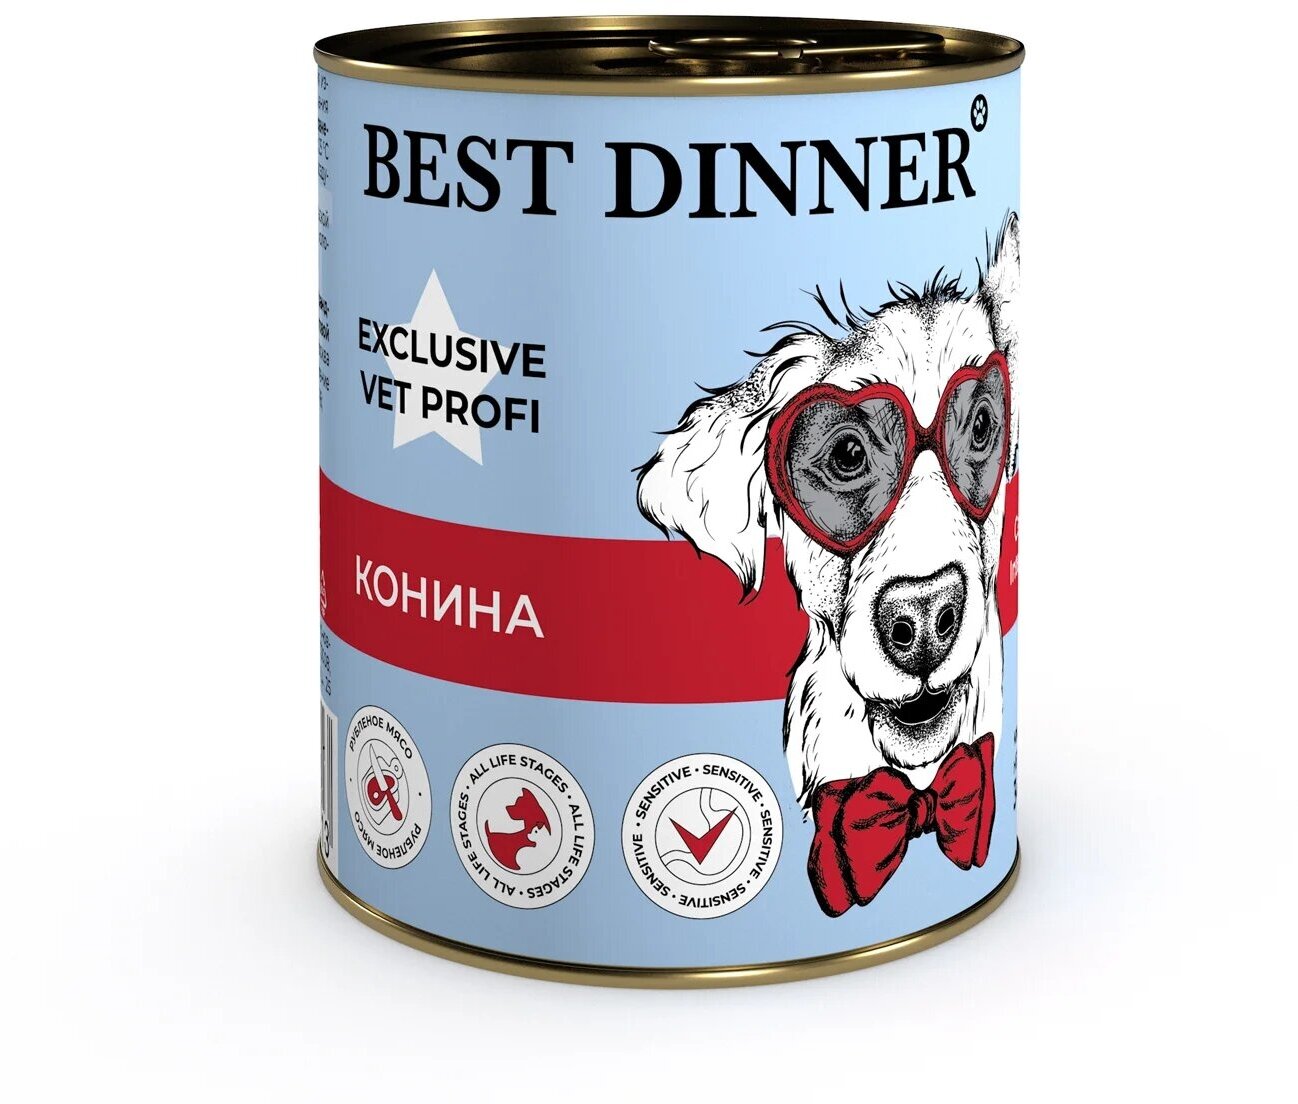 Best Dinner Vet Profi Gastro Intestinal Exclusive 340г конина консервы для собак